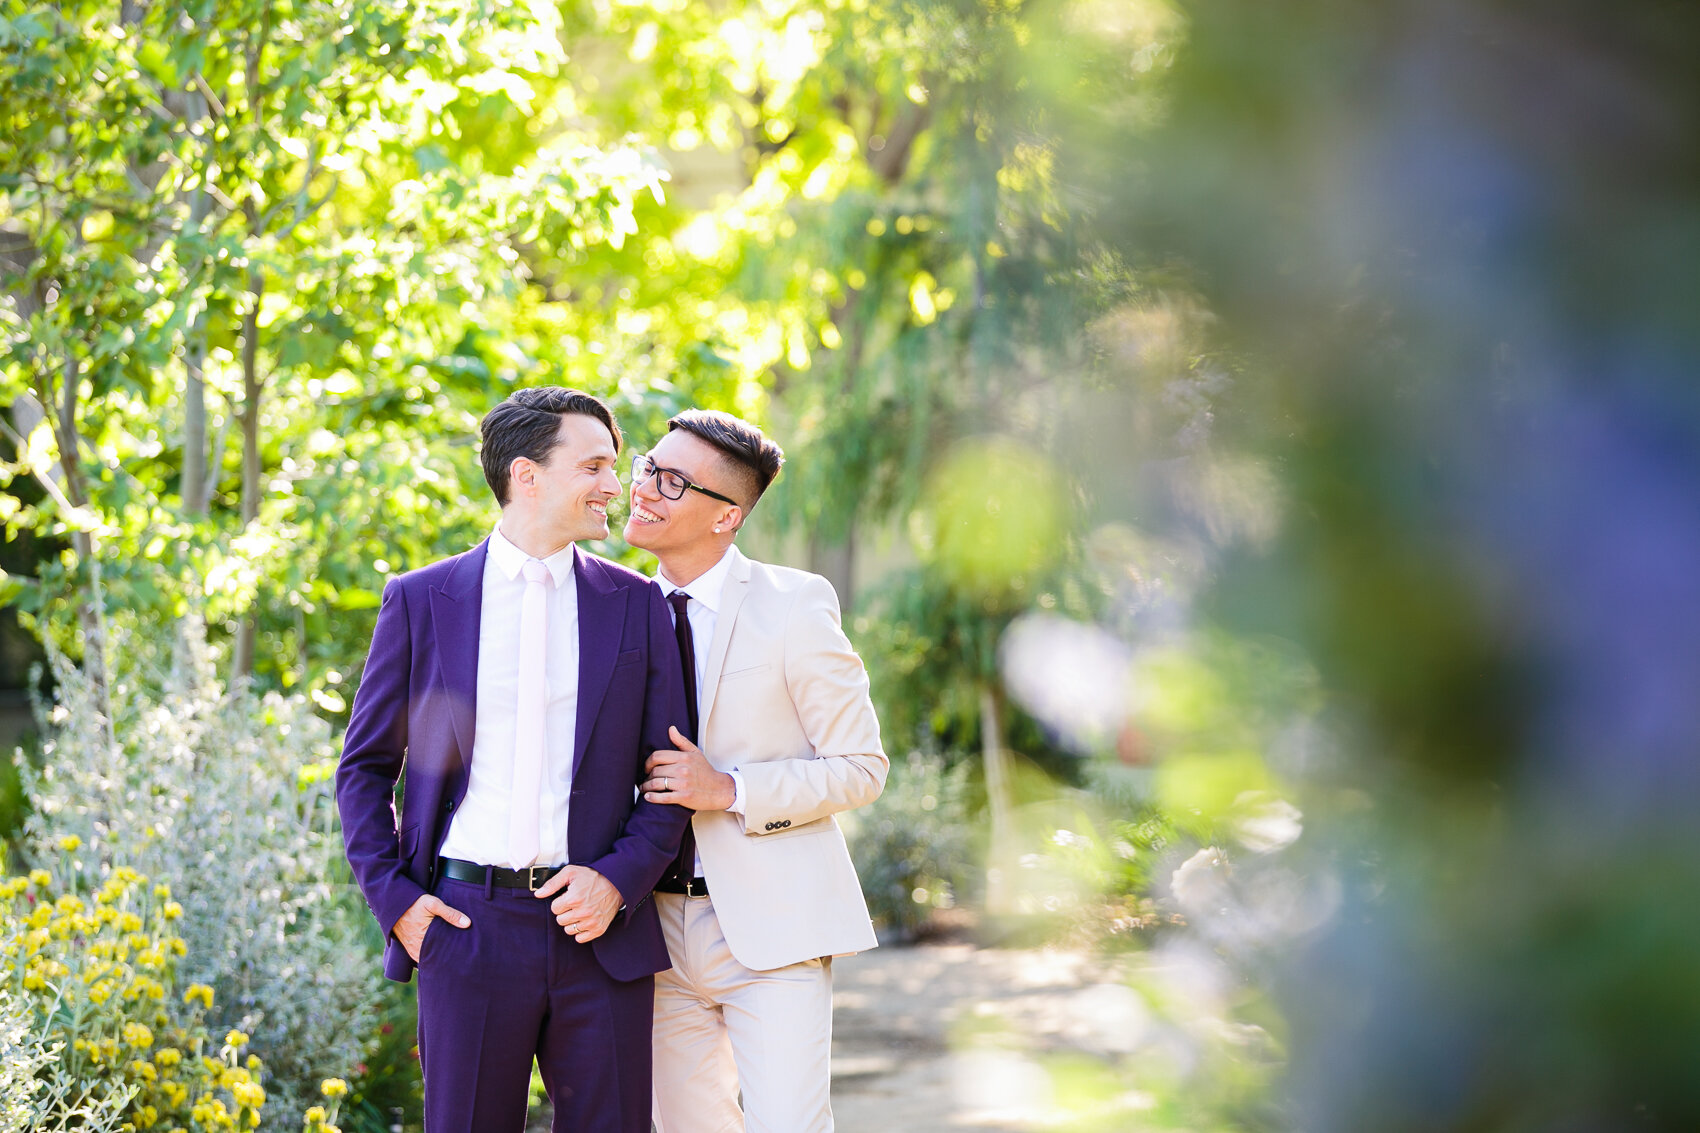 Rainbow_Wedding_Editorial_Photographer_Same_Sex_Couple_Gay_Marriage_Jewel_Tone_California_Malibu_Photography-0783.jpg